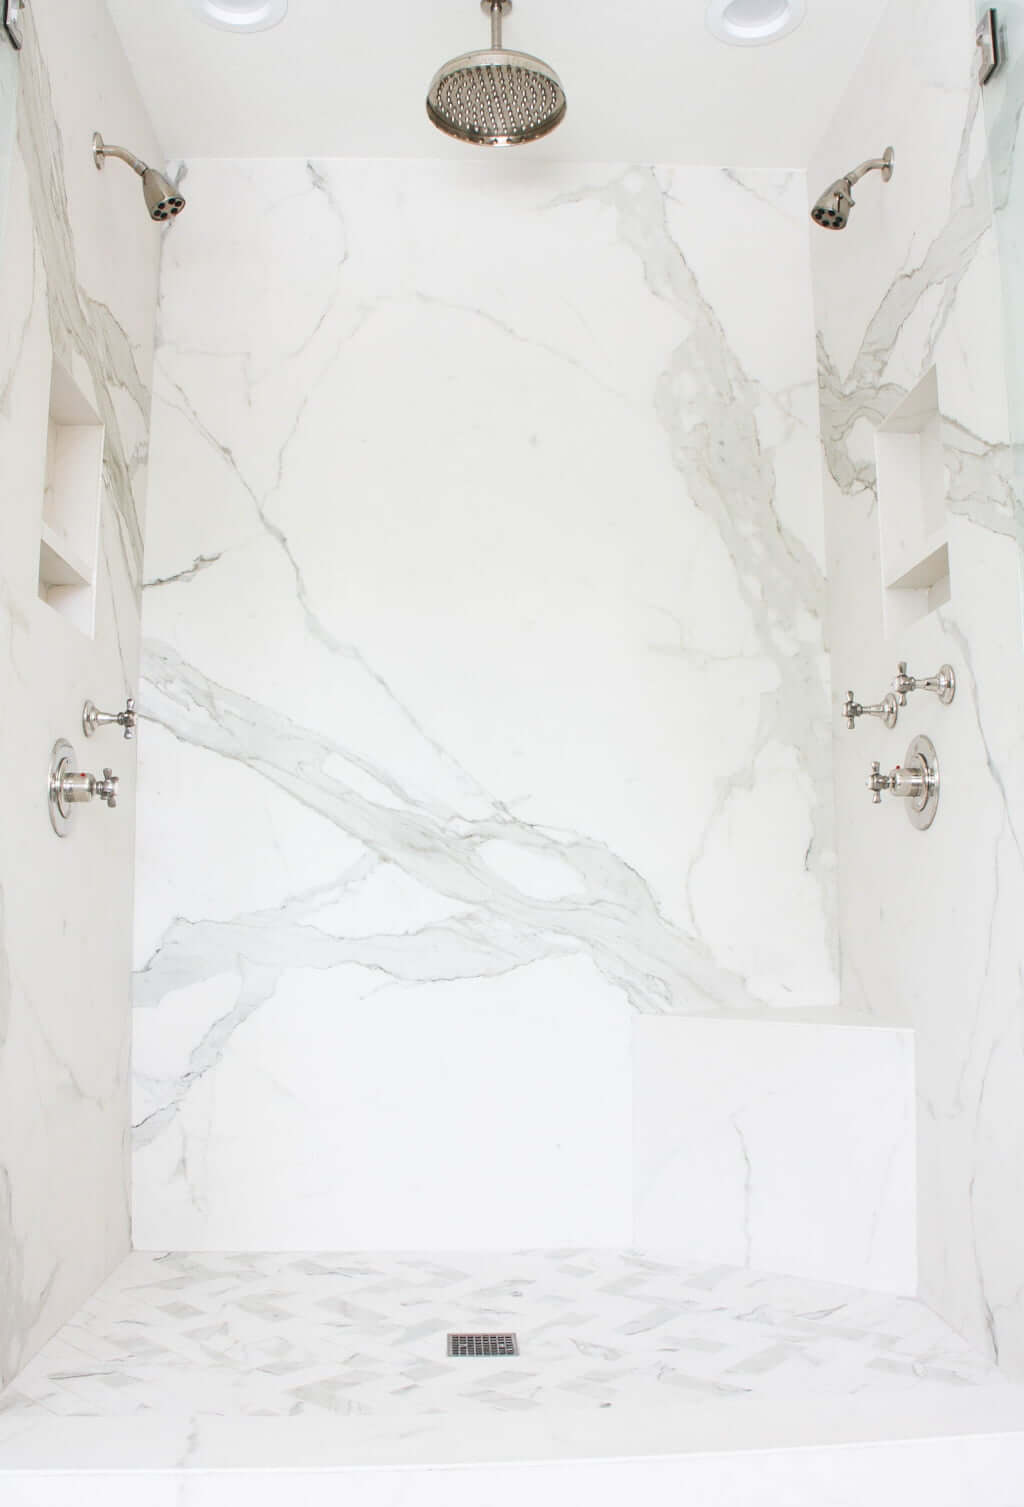 marble double walk-in shower with herringbone floor tile